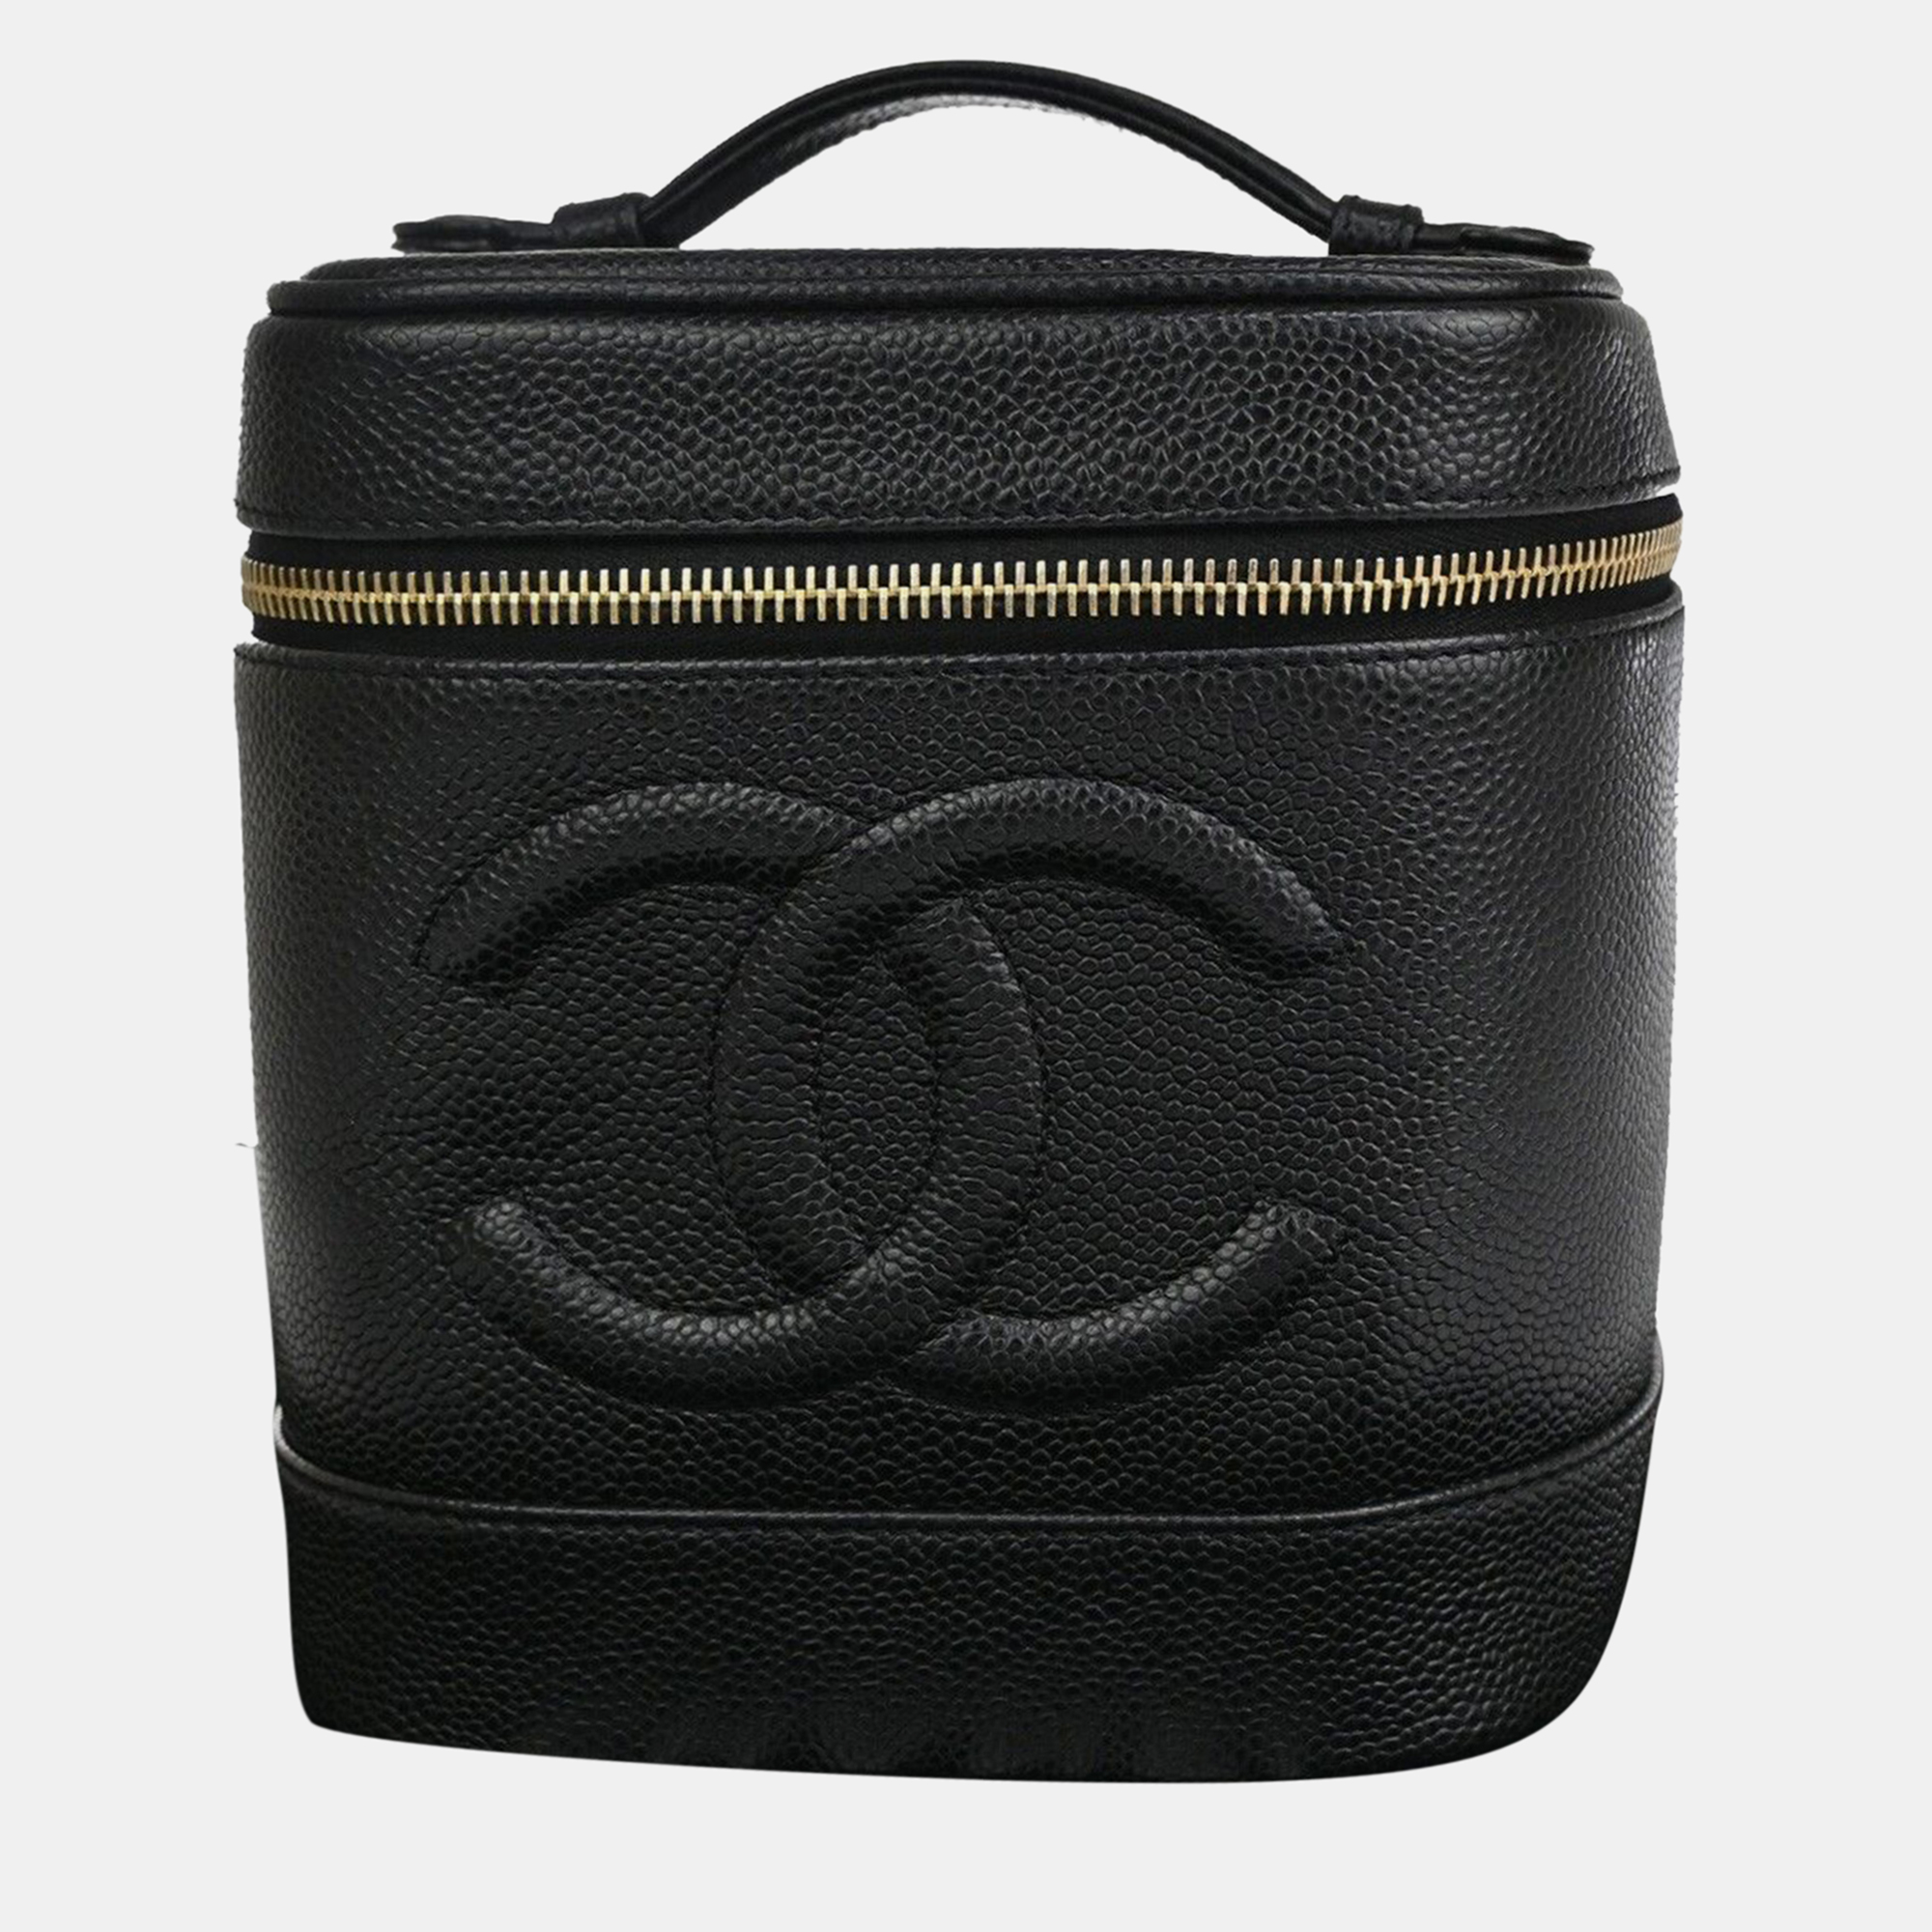 Chanel black leather vanity clutch